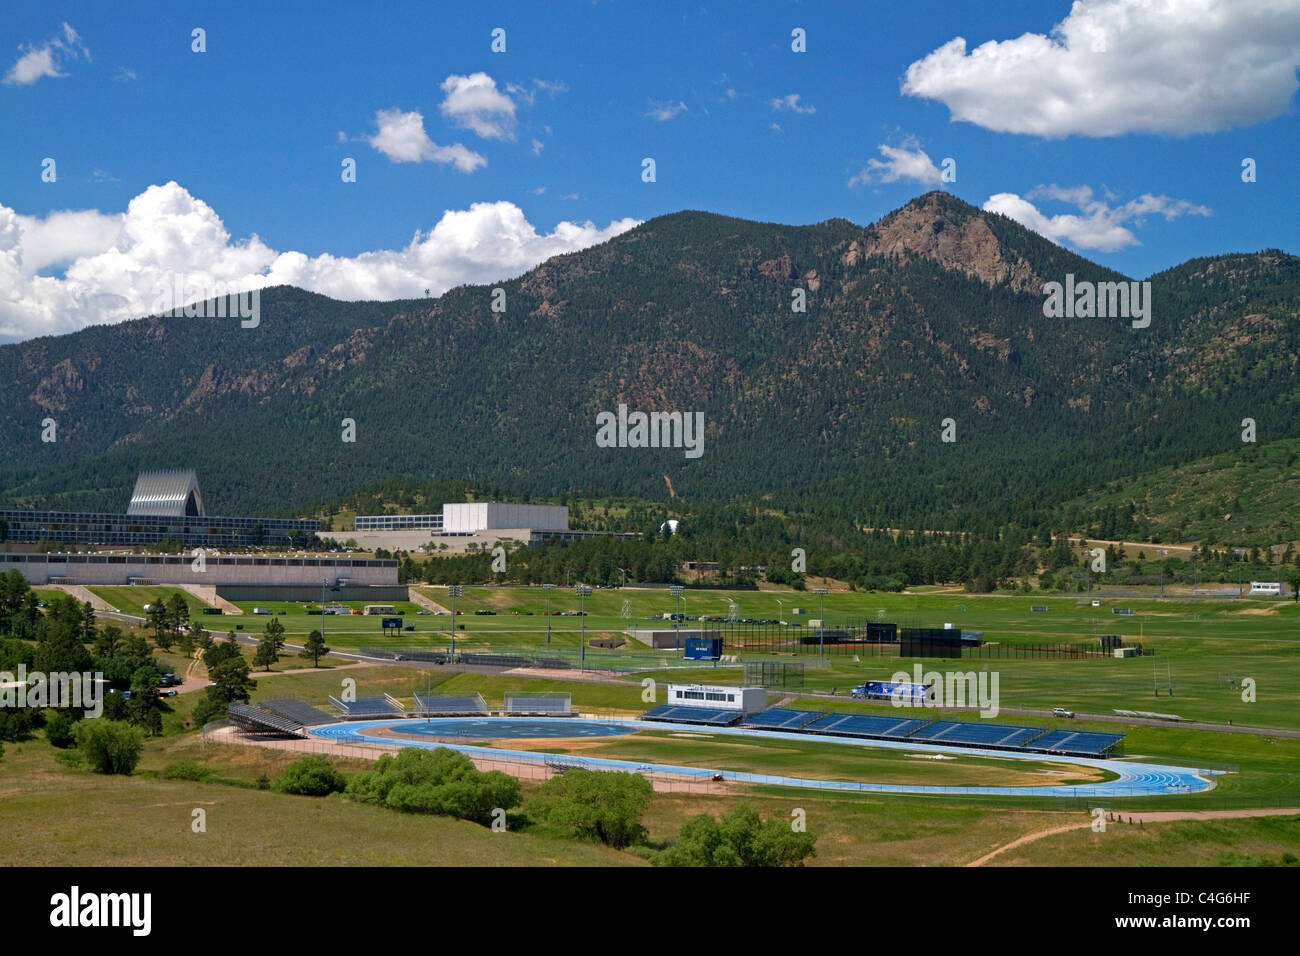 Le campus de l'United States Air Force Academy de Colorado Springs, Colorado, États-Unis. Banque D'Images